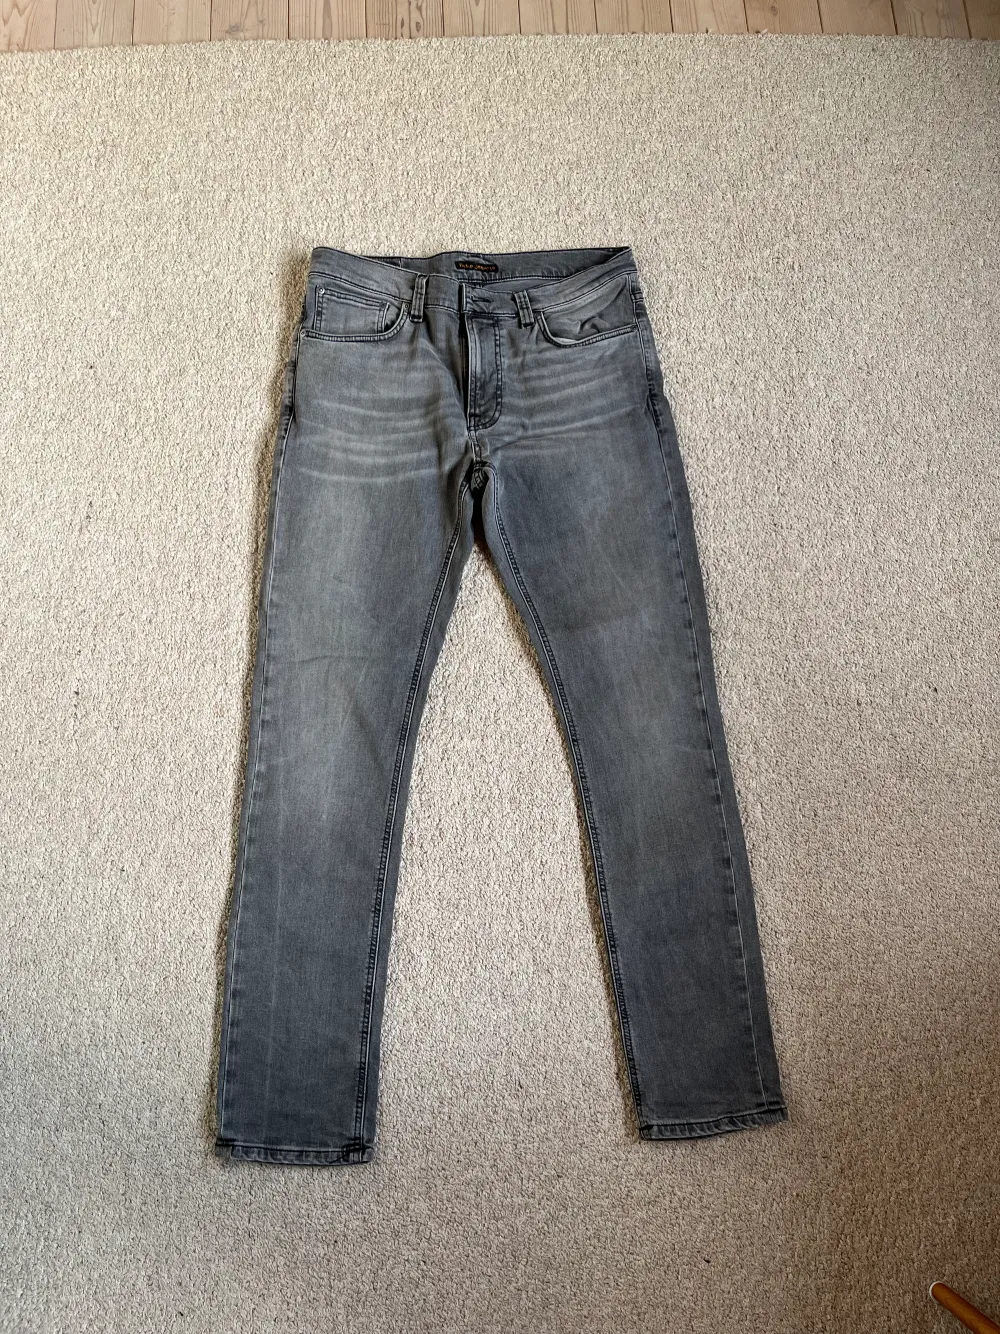 Sparsamt använda Nudie Jeans.  Storlek 32/32 Är 188cm lång . Jeans & Byxor.